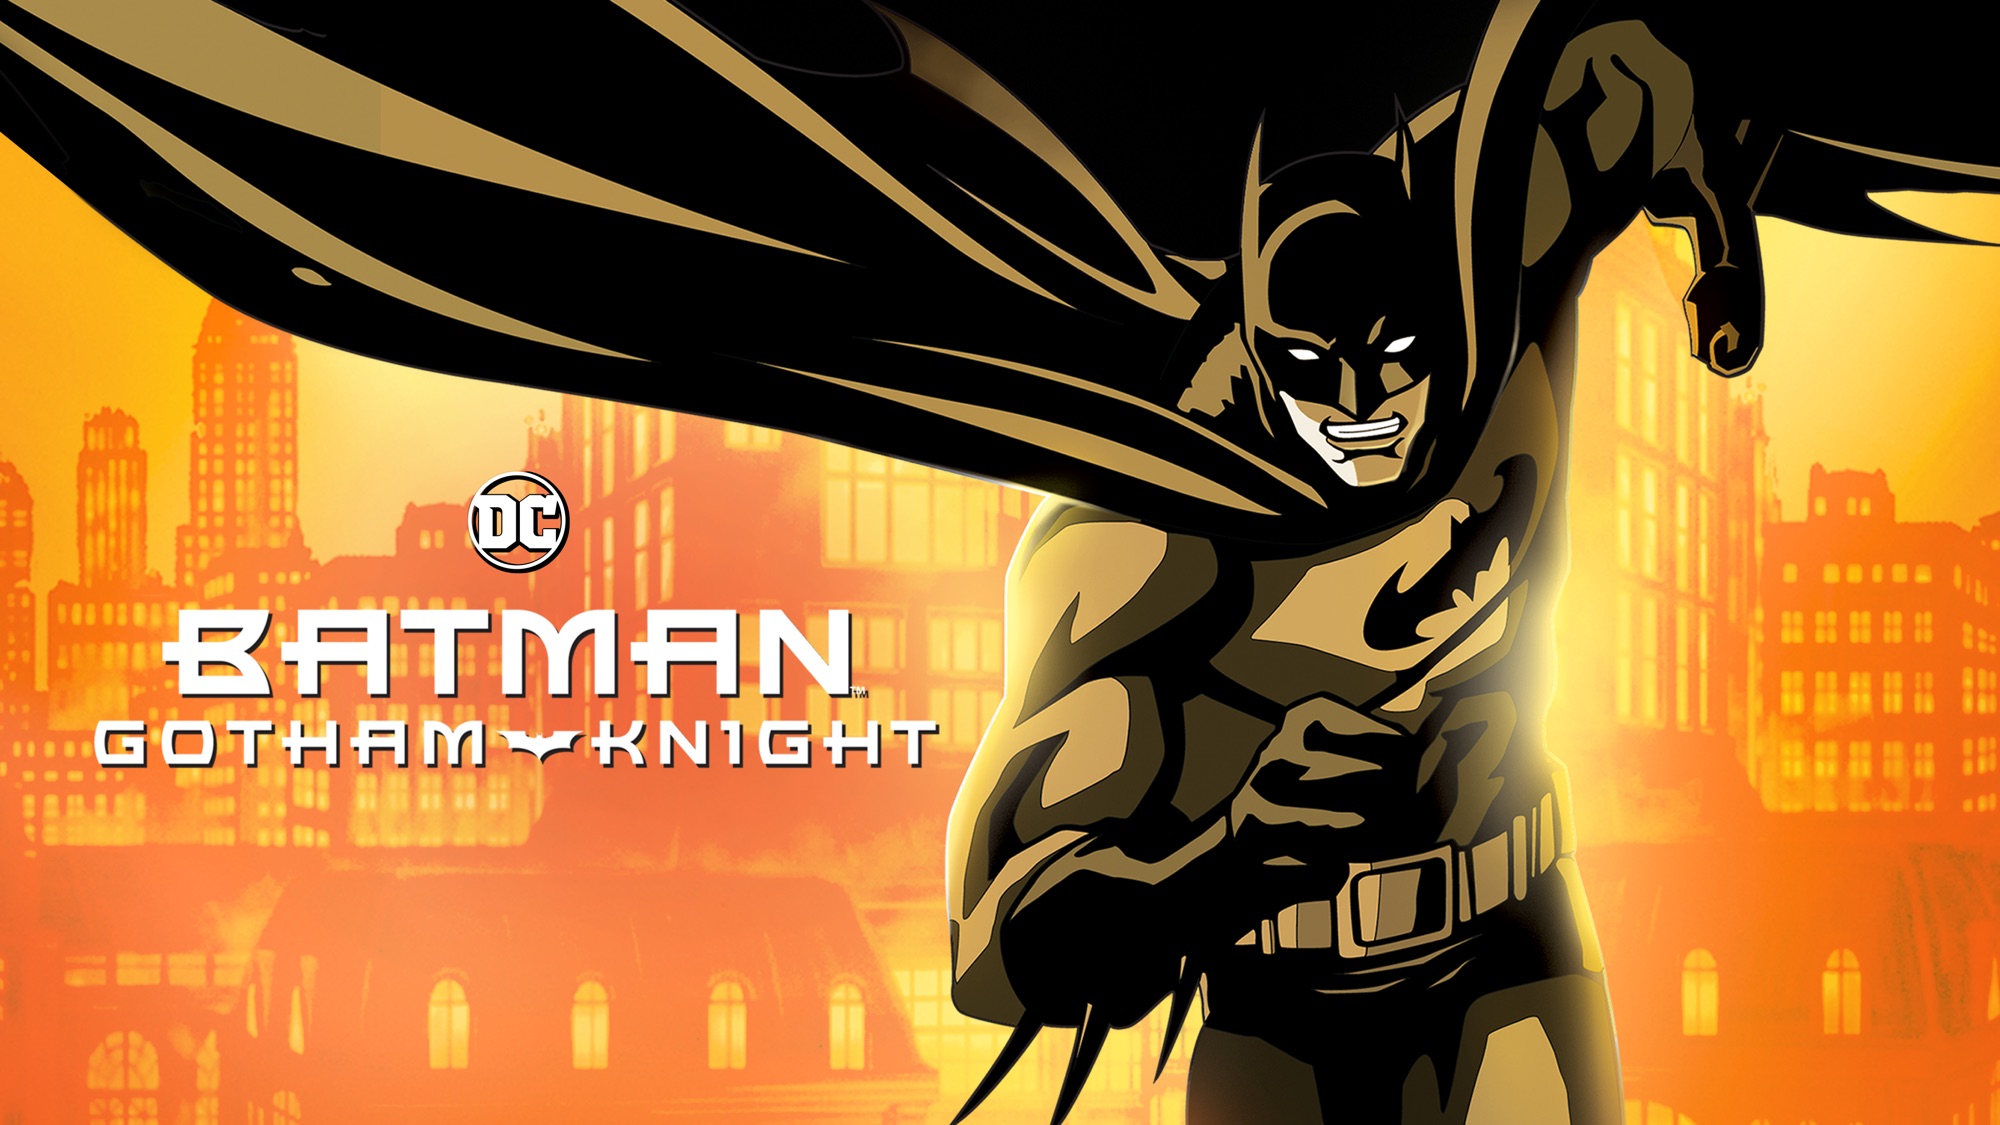 Descarga gratuita de fondo de pantalla para móvil de Películas, The Batman, Batman: Gotham Knight.